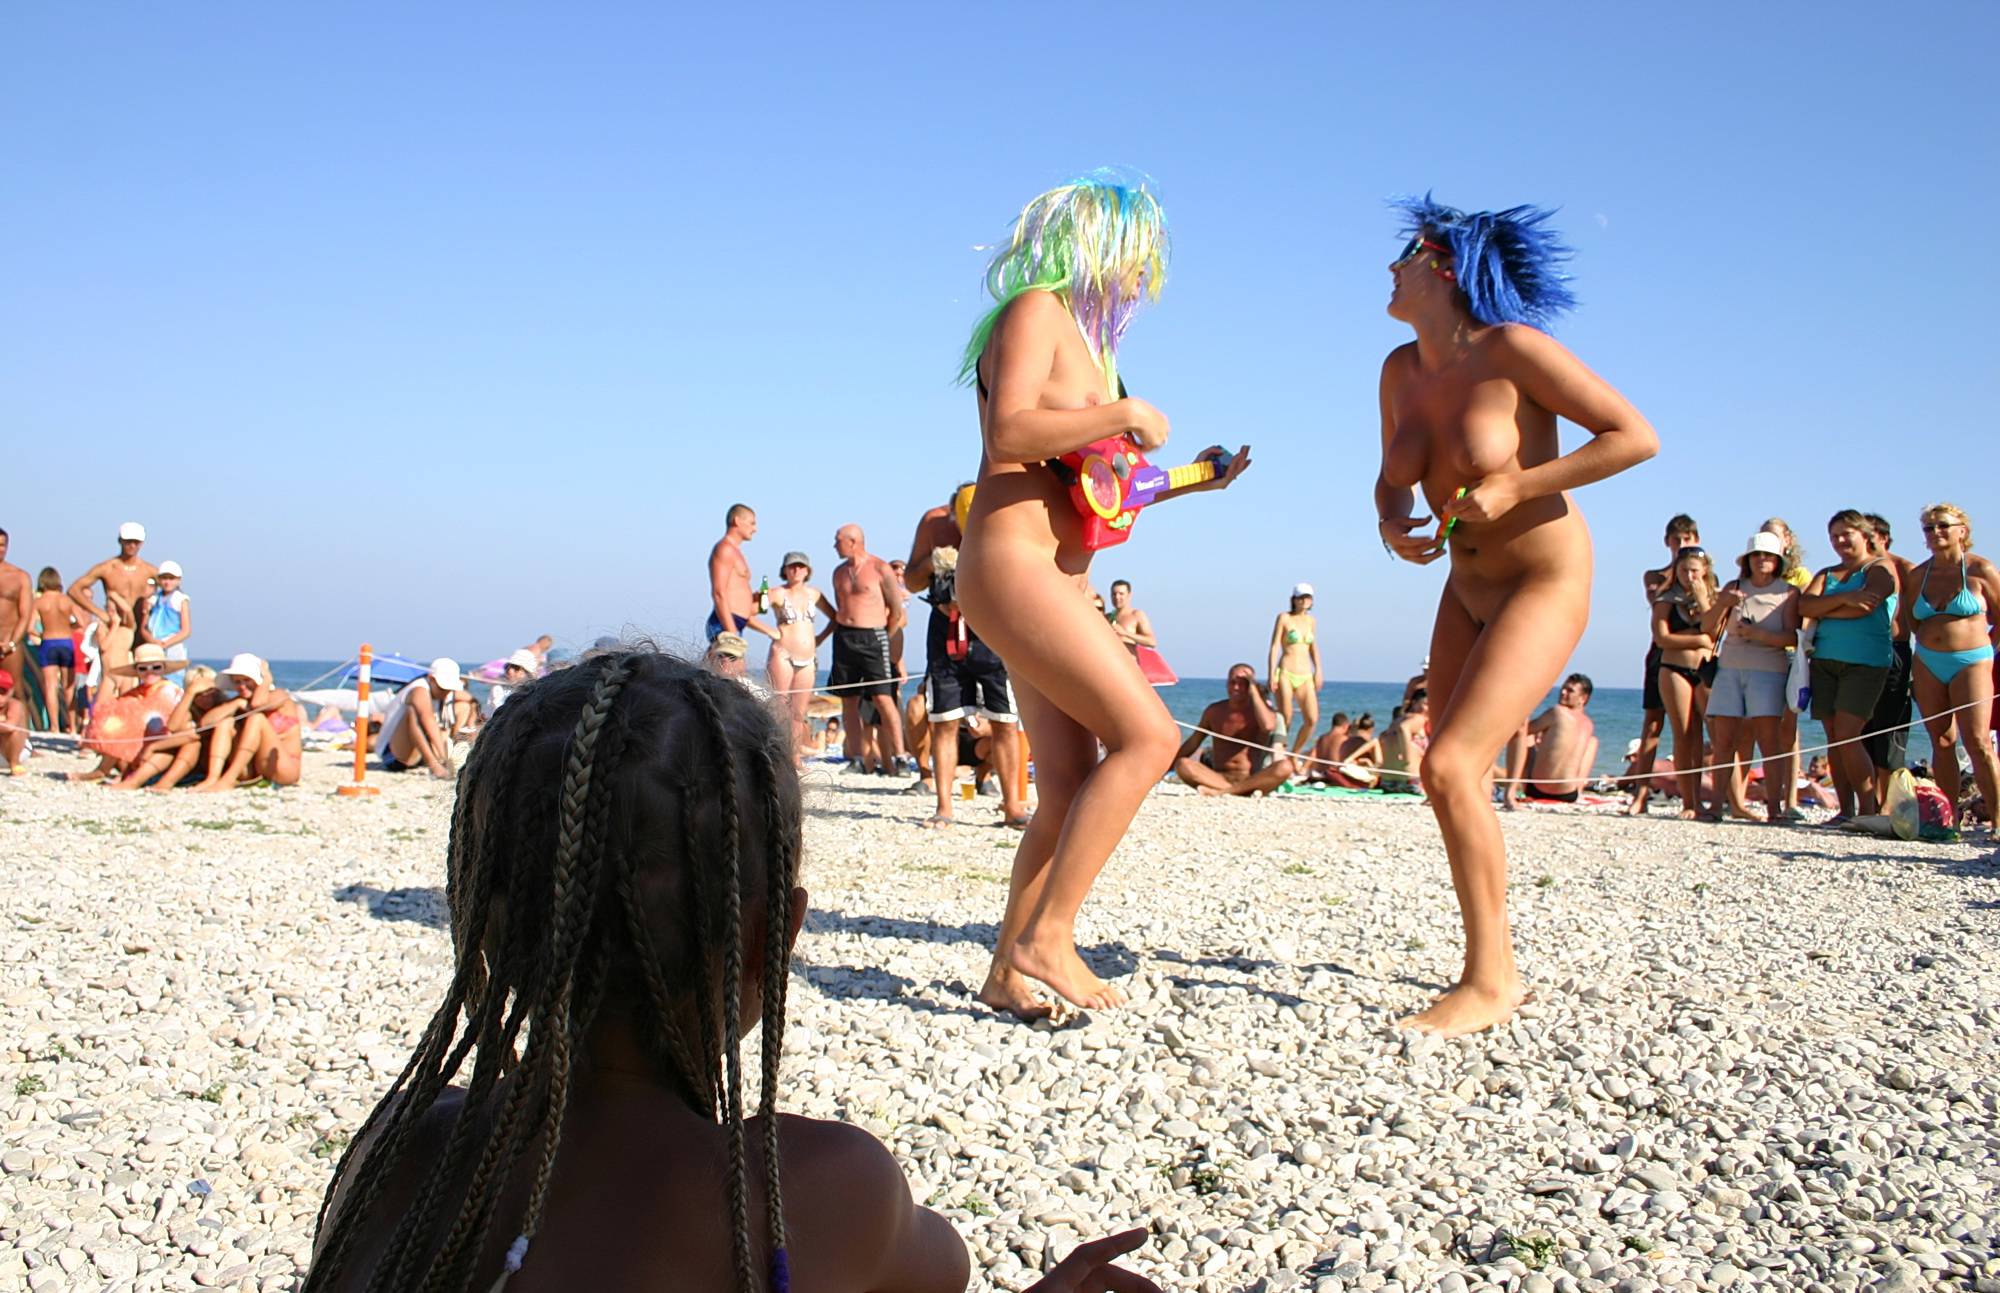 Nudist Pictures Naturist Beach Contests - 1